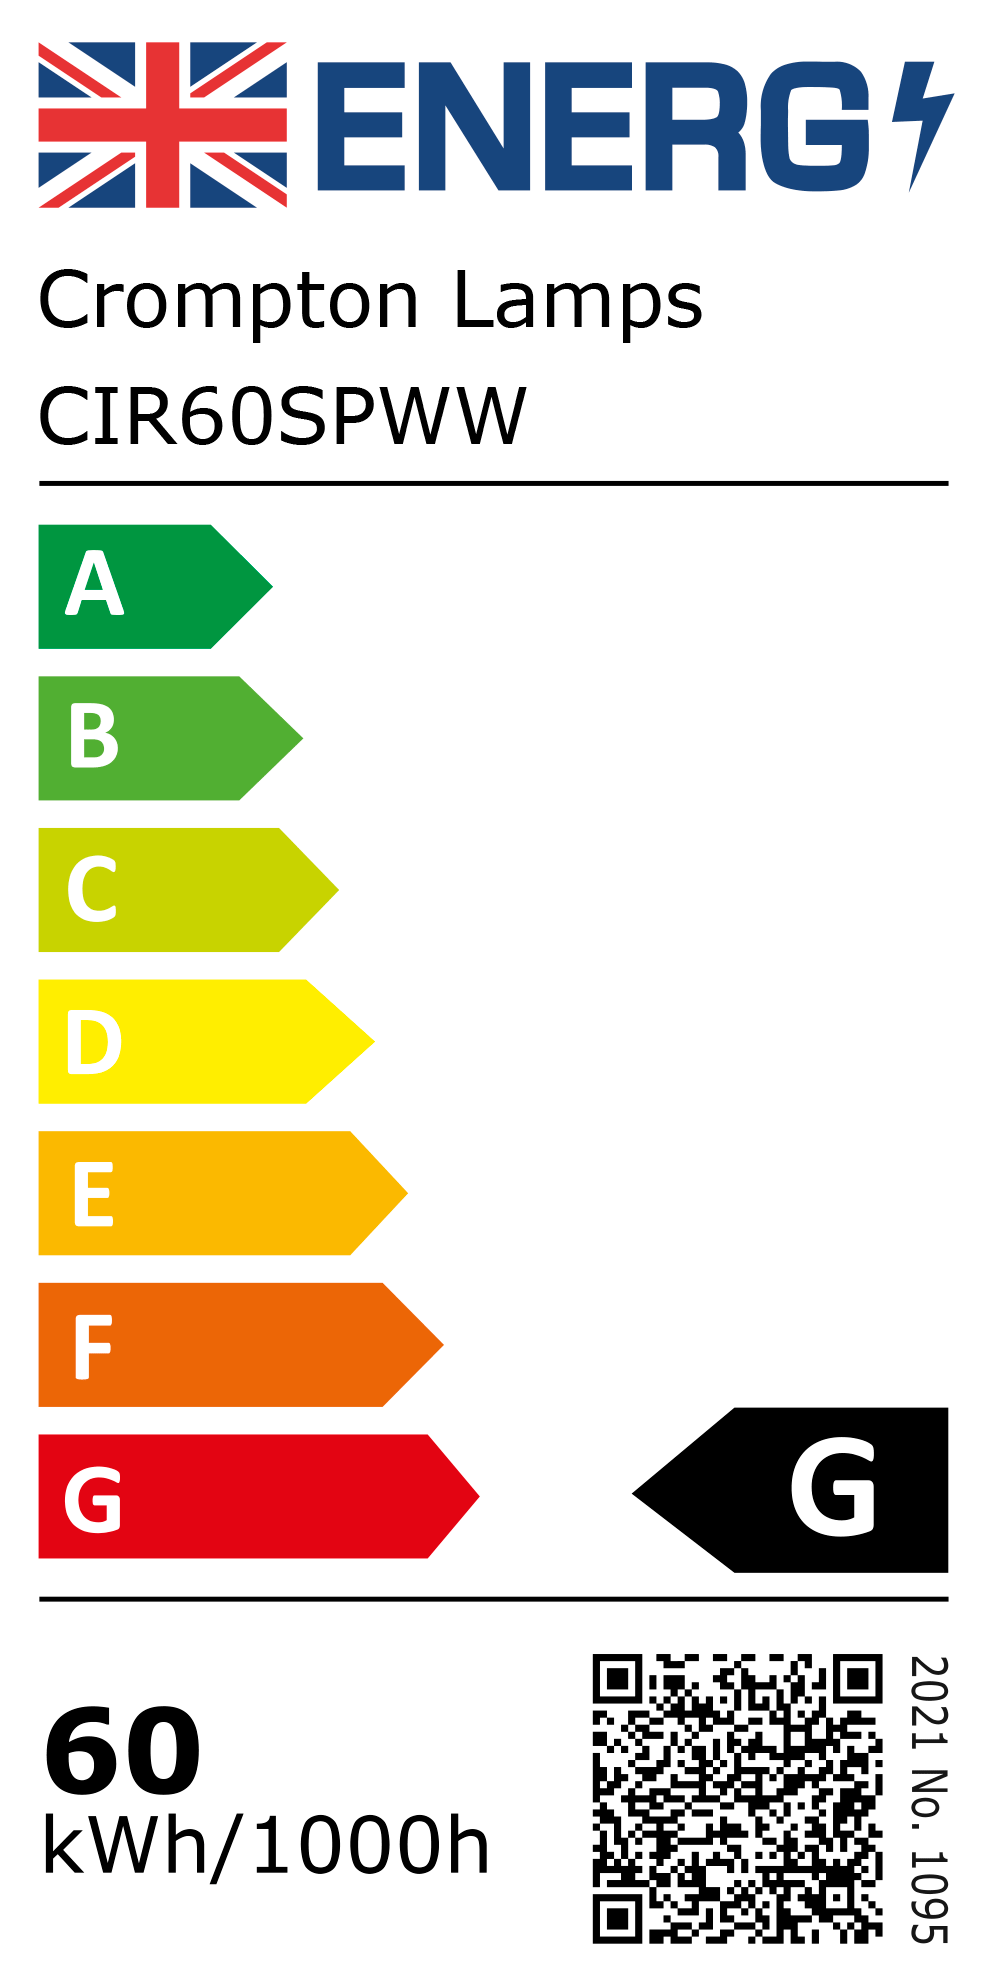 New 2021 Energy Rating Label: Stock Code CIR60SPWW